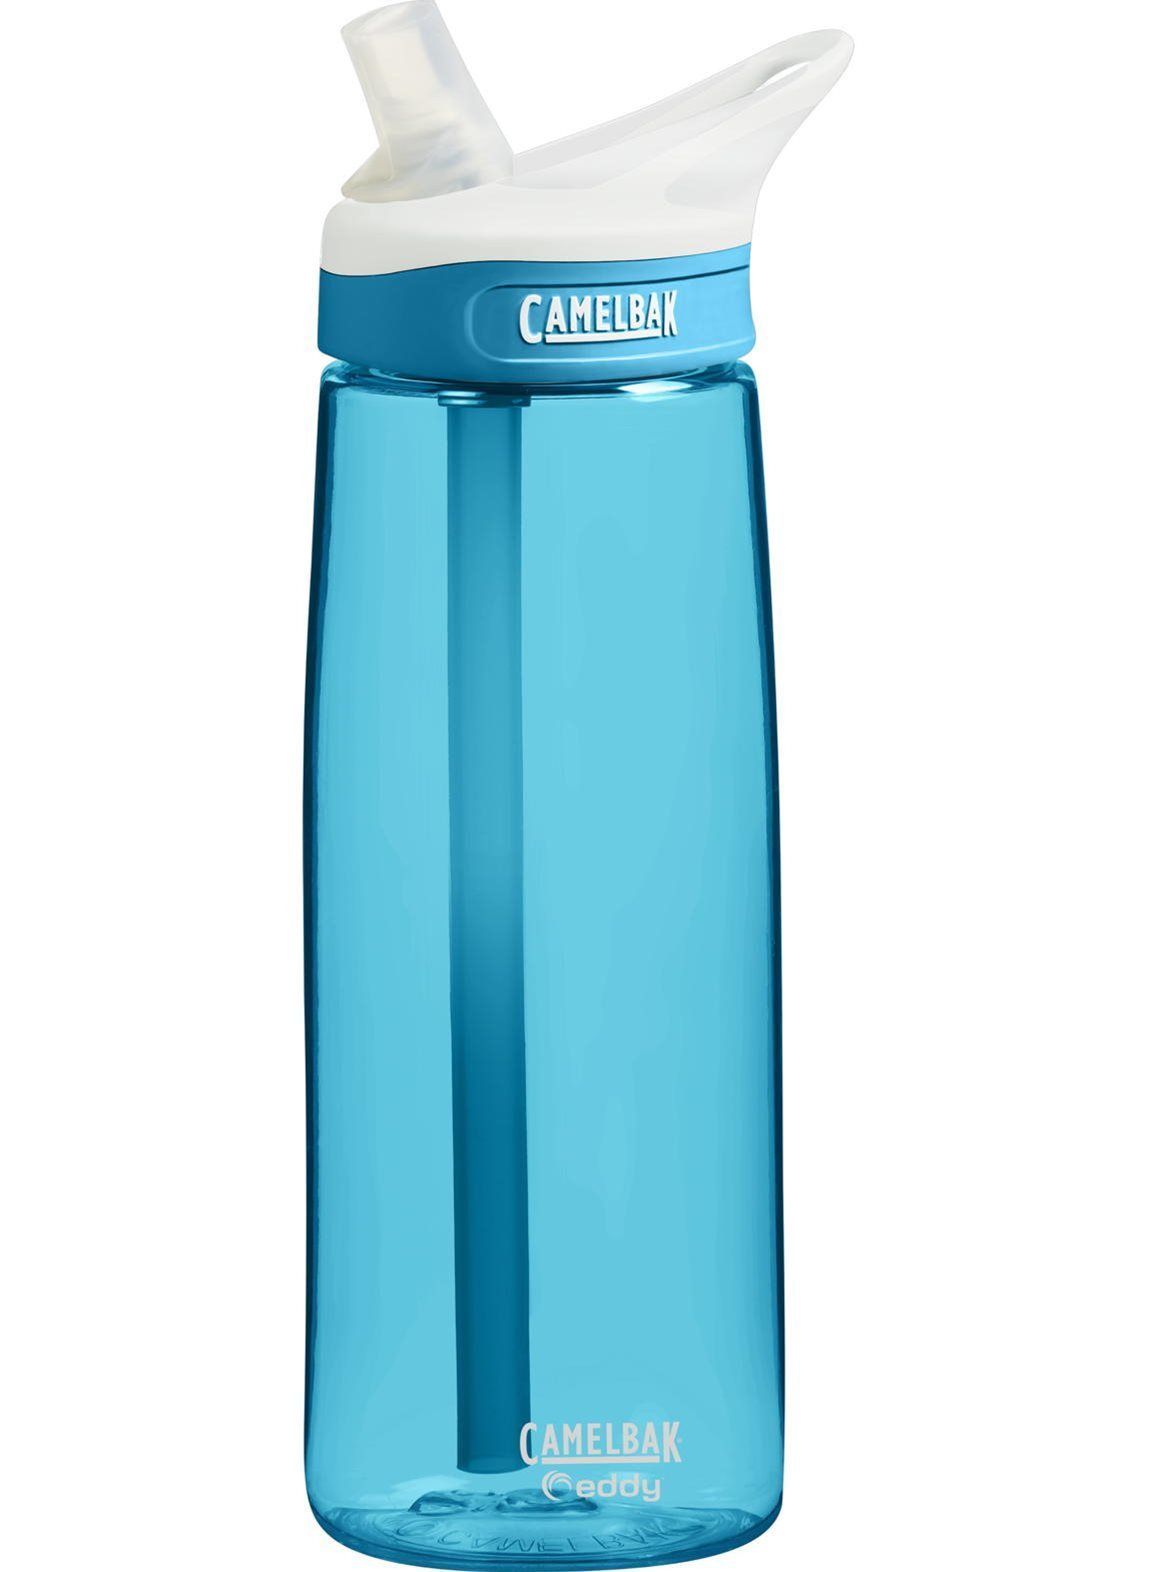 Camelbak botella eddy azul 750 ml de agua botella botella a prueba Bike 